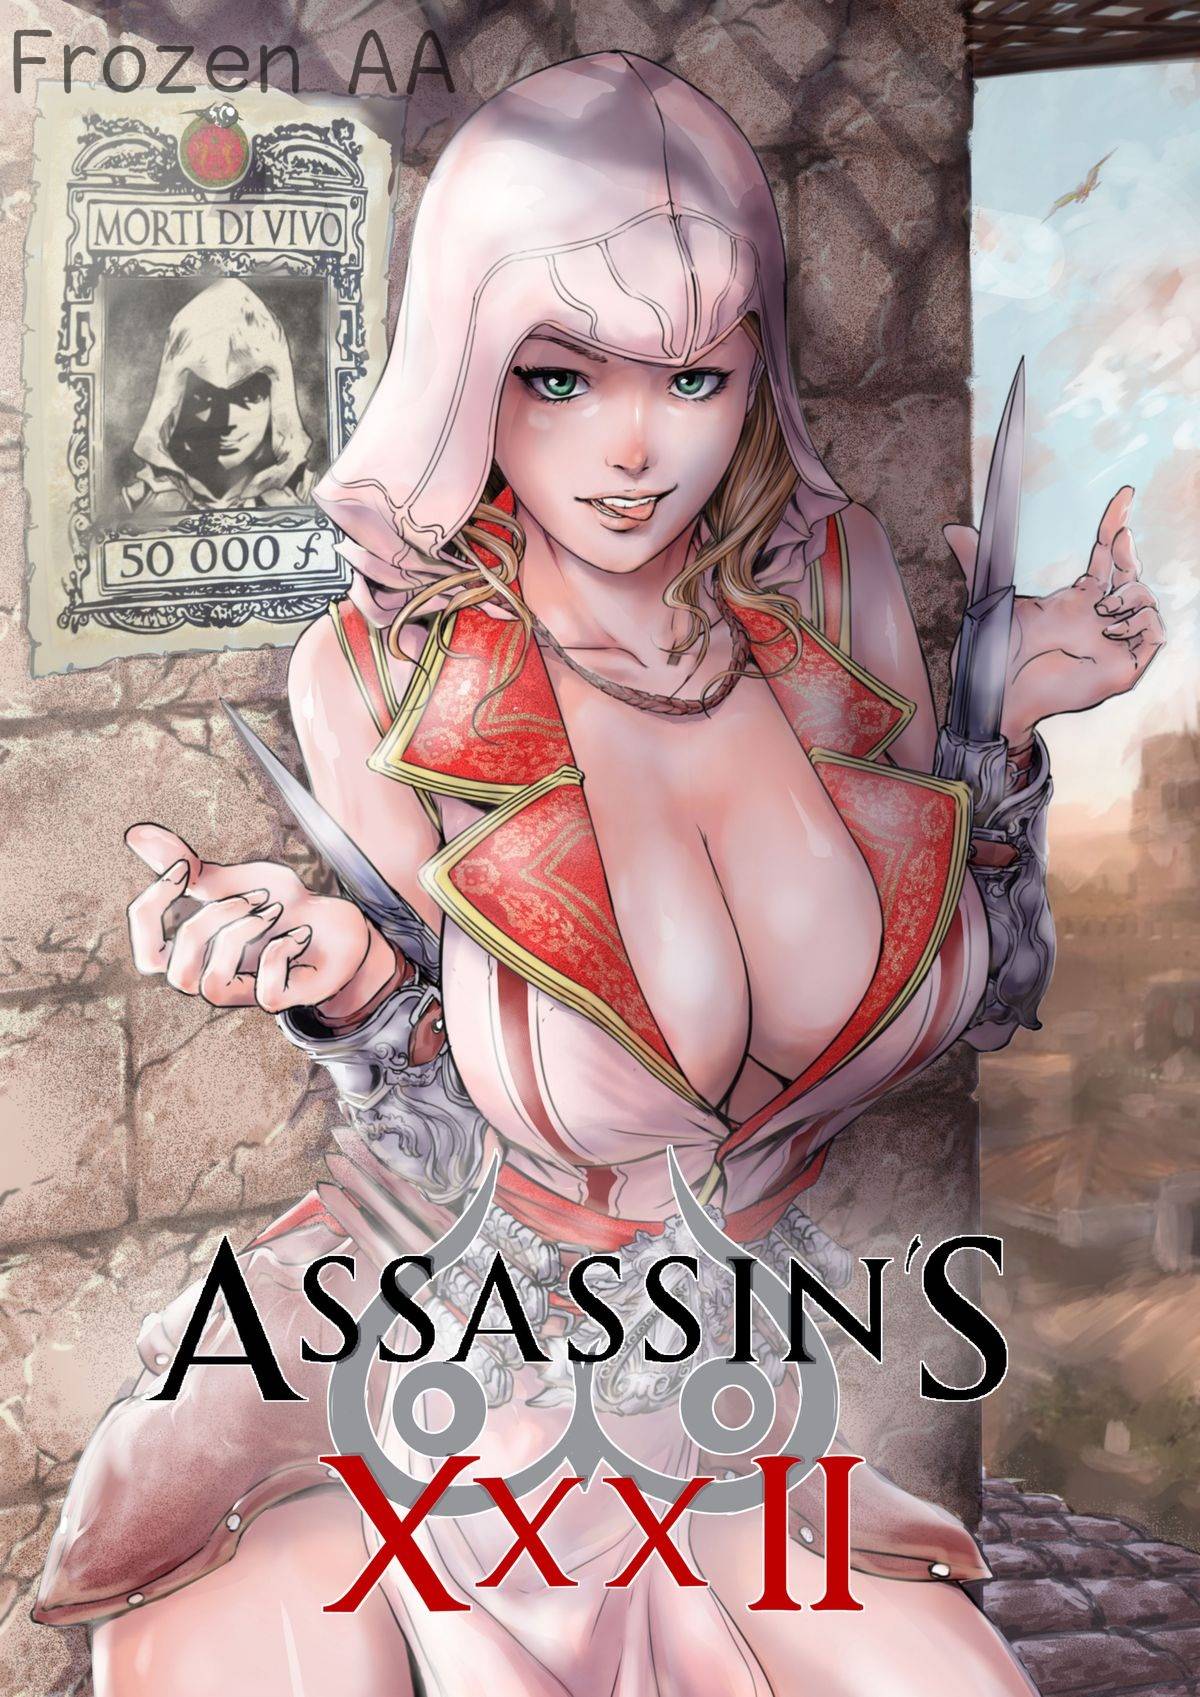 Read Torn S Assassin S Xxx Ii Assassin S Creed Thai